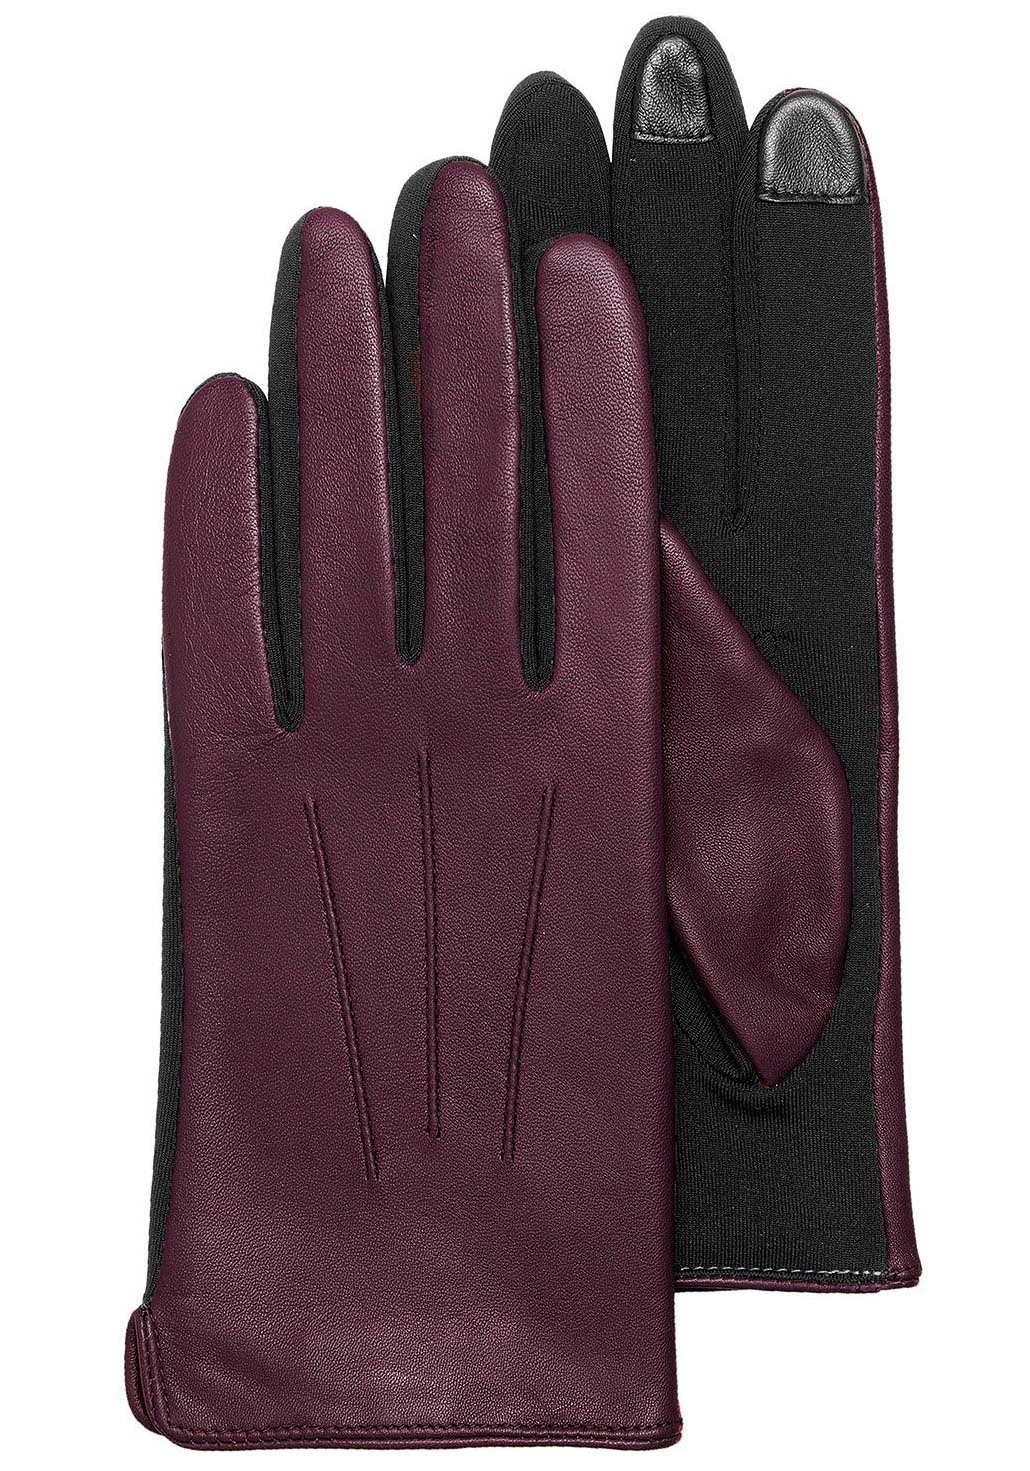 KESSLER Lederhandschuhe Mia Touchfunktion, Stretch, purple am Gummizug deep Handgelenk